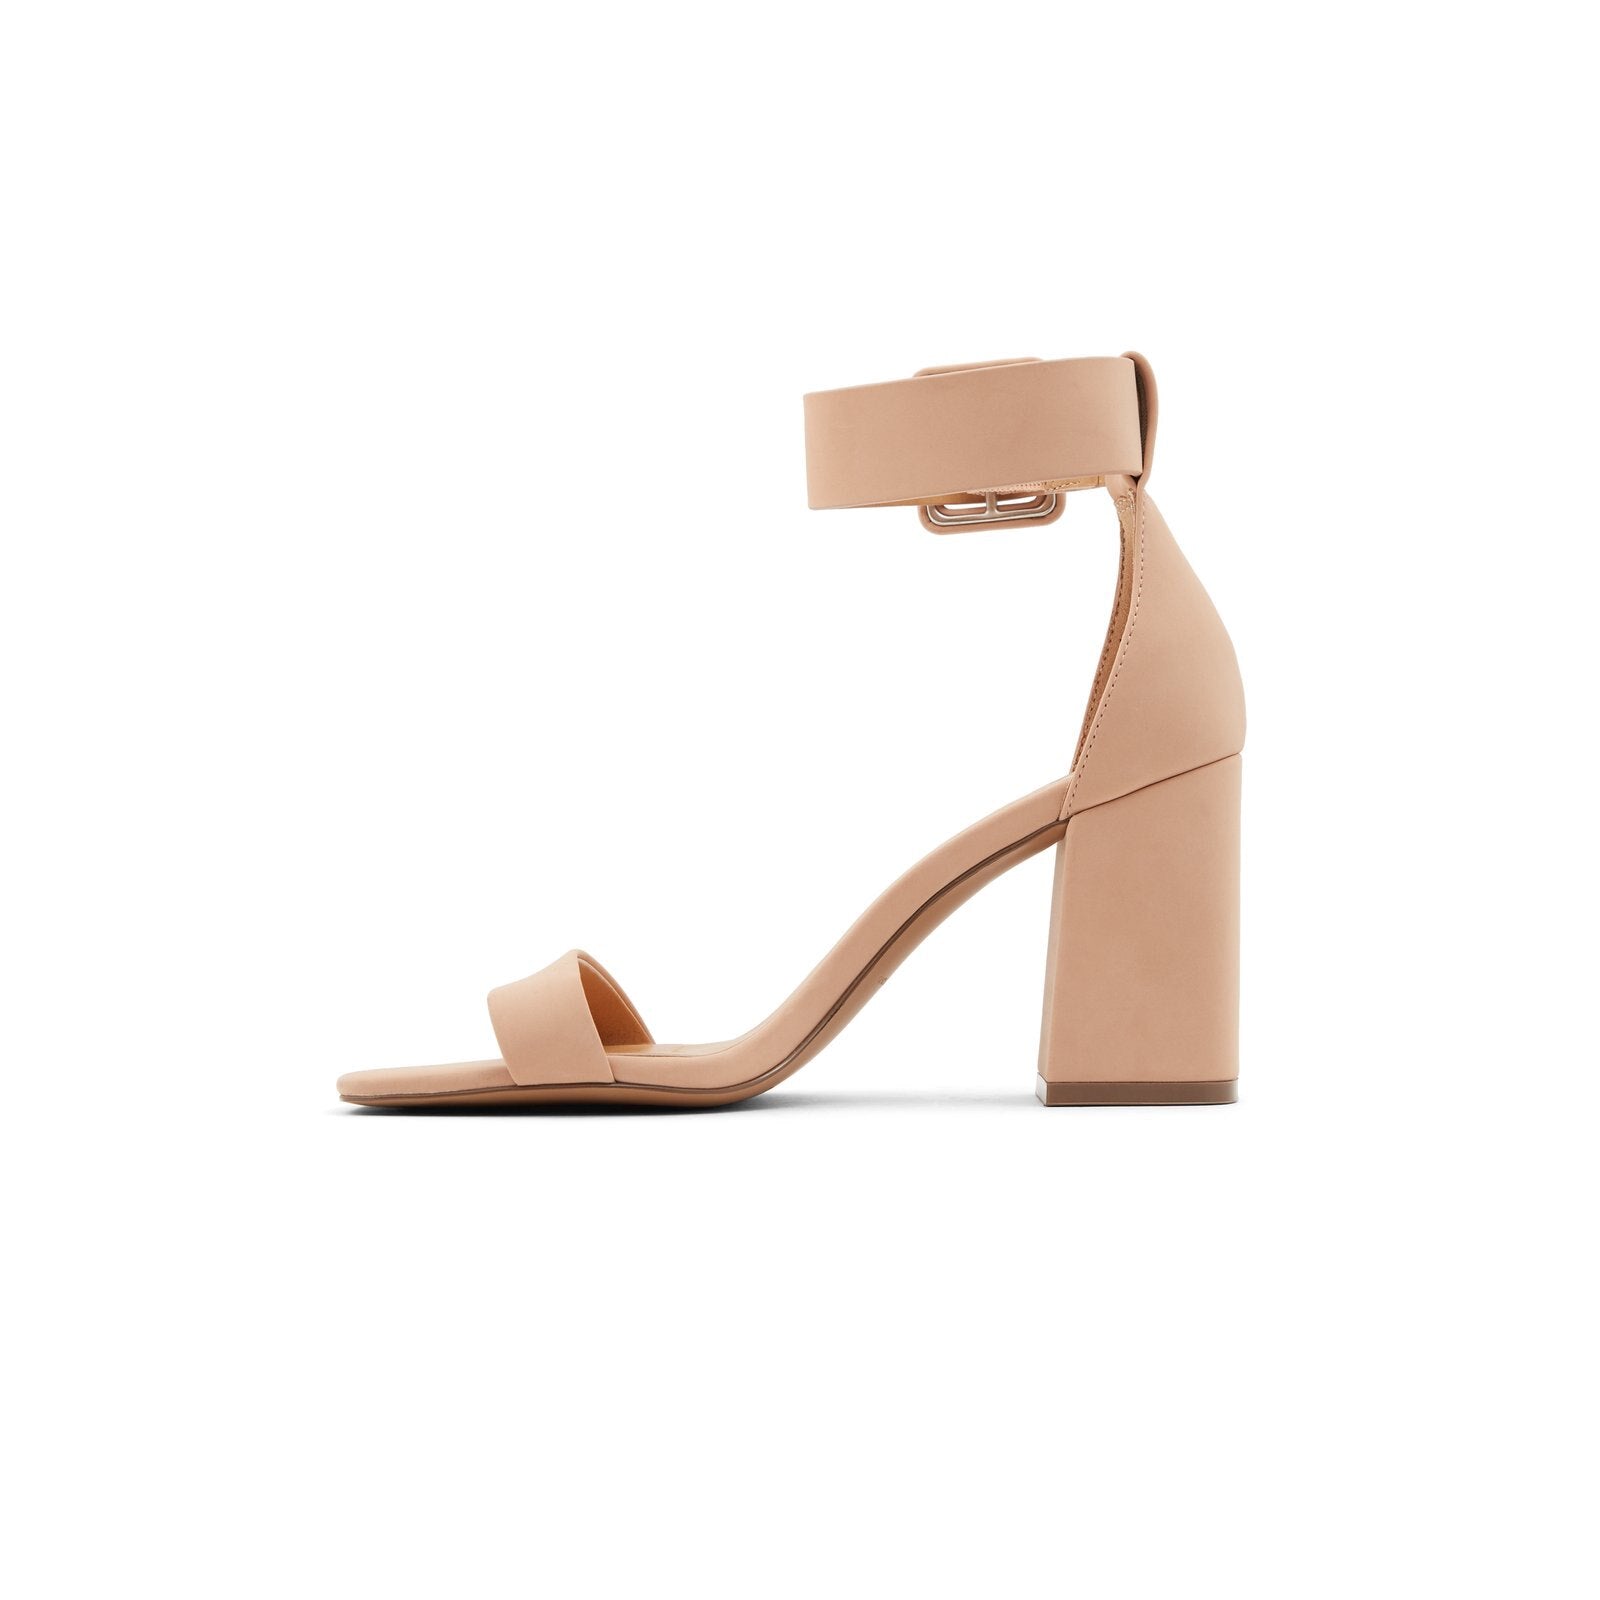 Elenna / Heeled Sandals Women Shoes - DARK BEIGE - CALL IT SPRING KSA